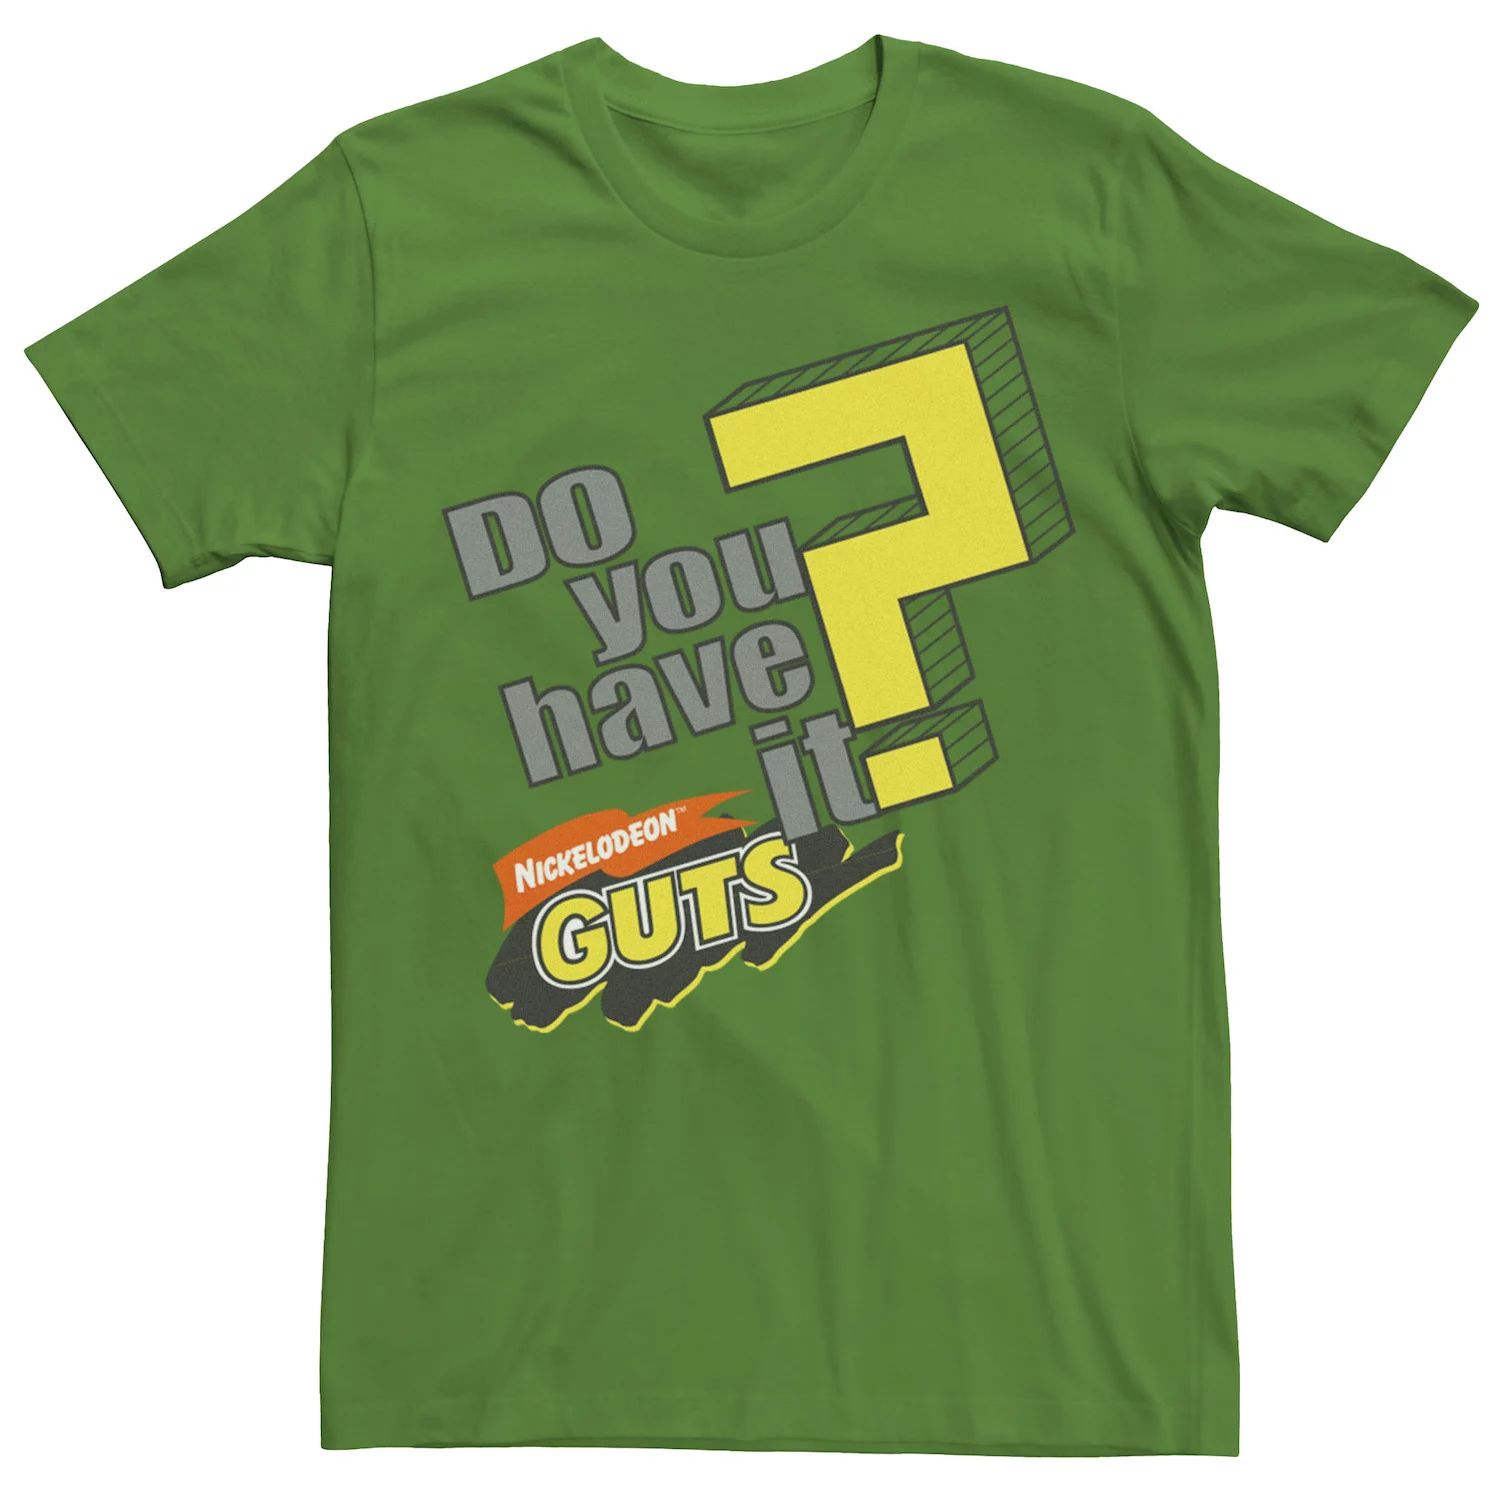 Мужская винтажная футболка с логотипом и графическим рисунком Guts Do You Have It Nickelodeon kelly